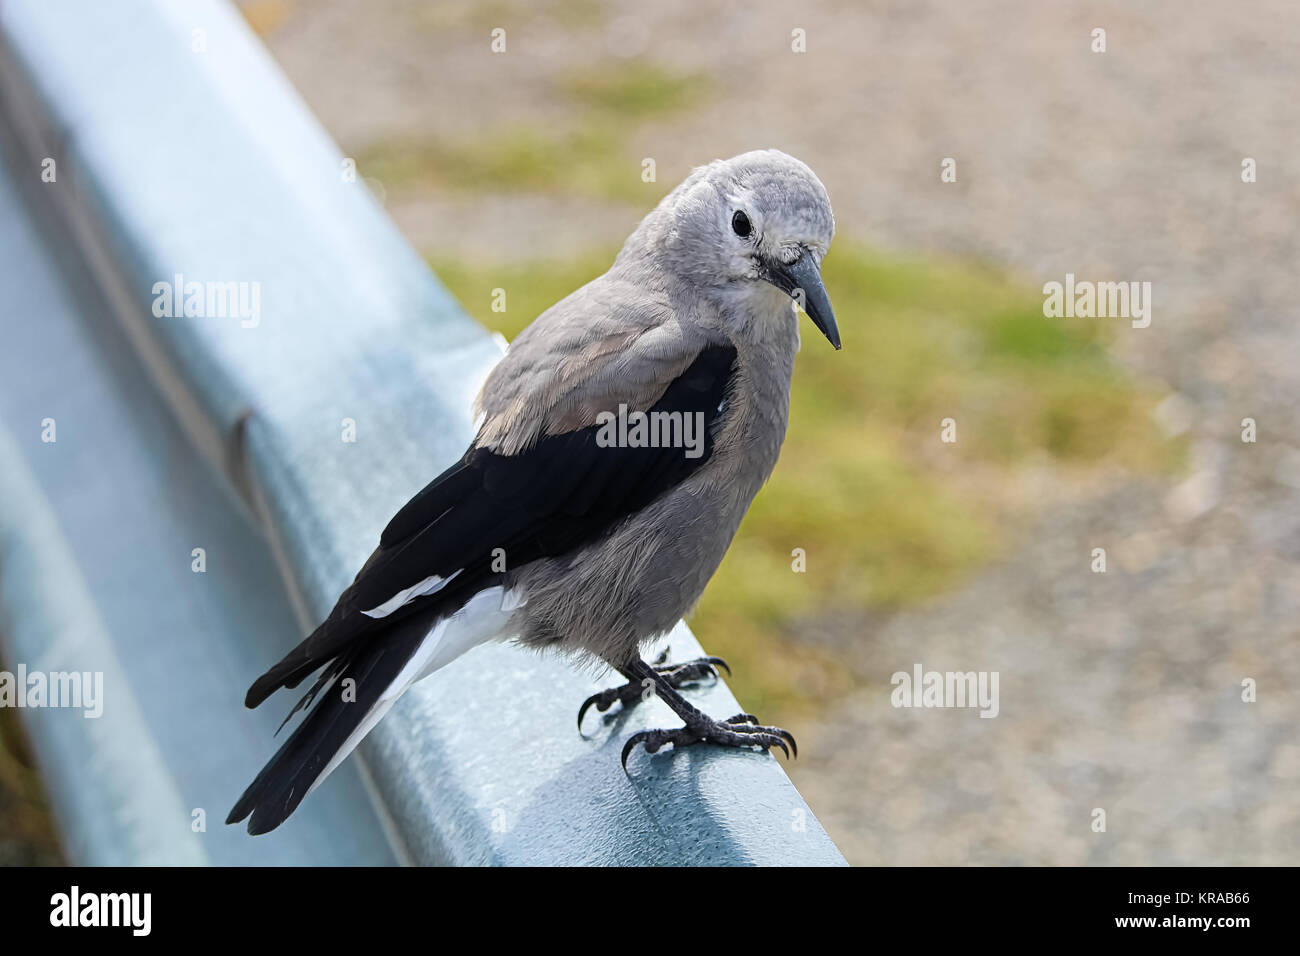 A Clarks Nutcracker bird sitting on a barrier rail. Stock Photo